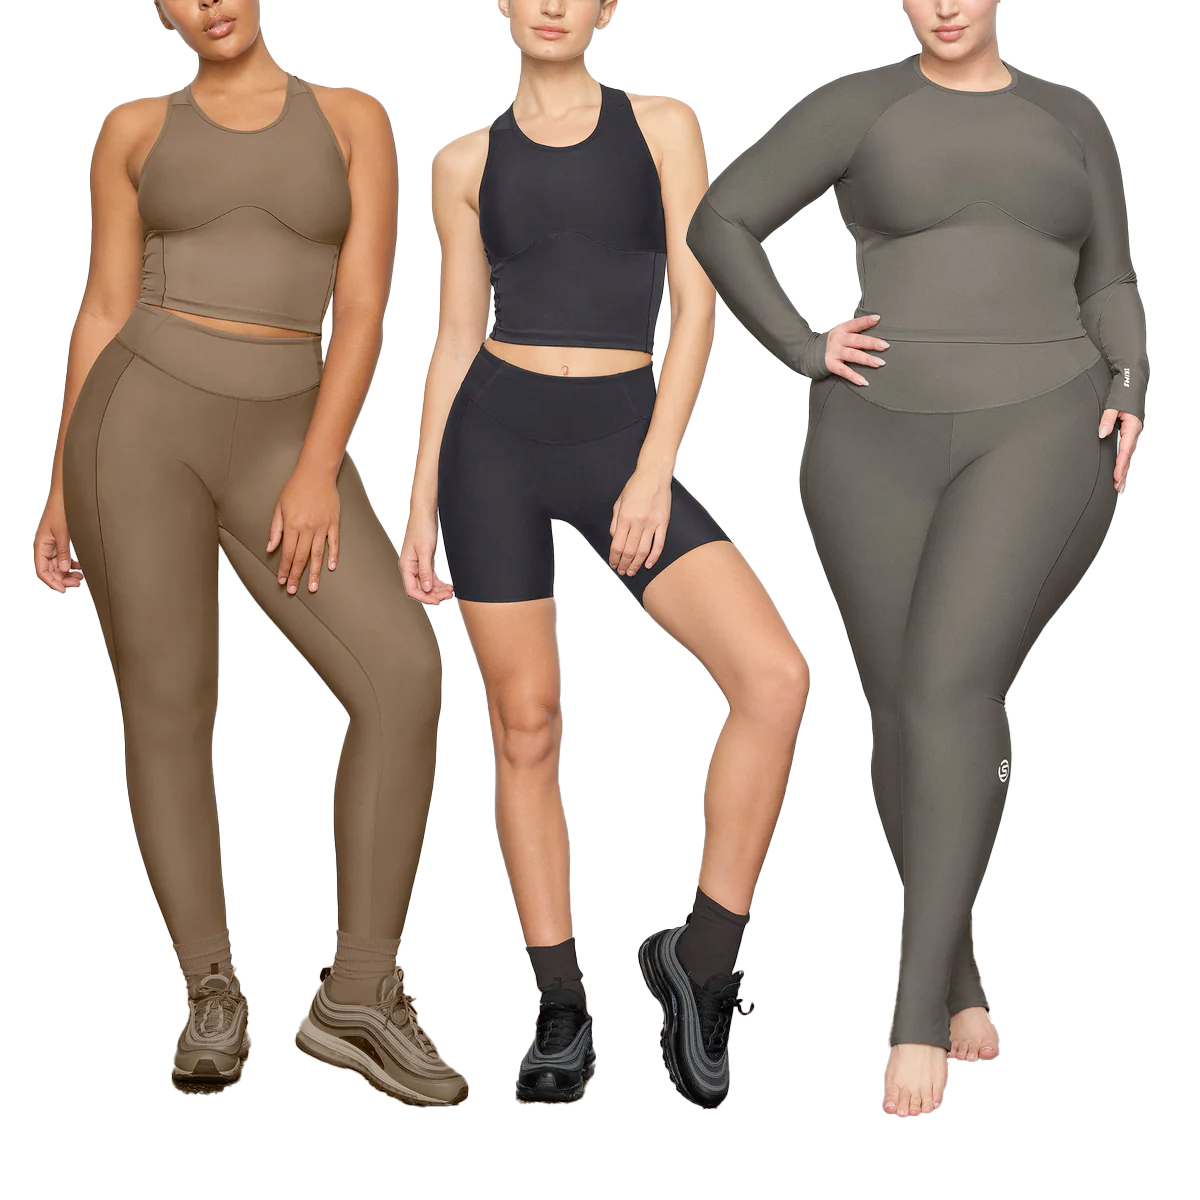 Kim Kardashian's SKIMS Launches Squat-Proof Performance Activewear